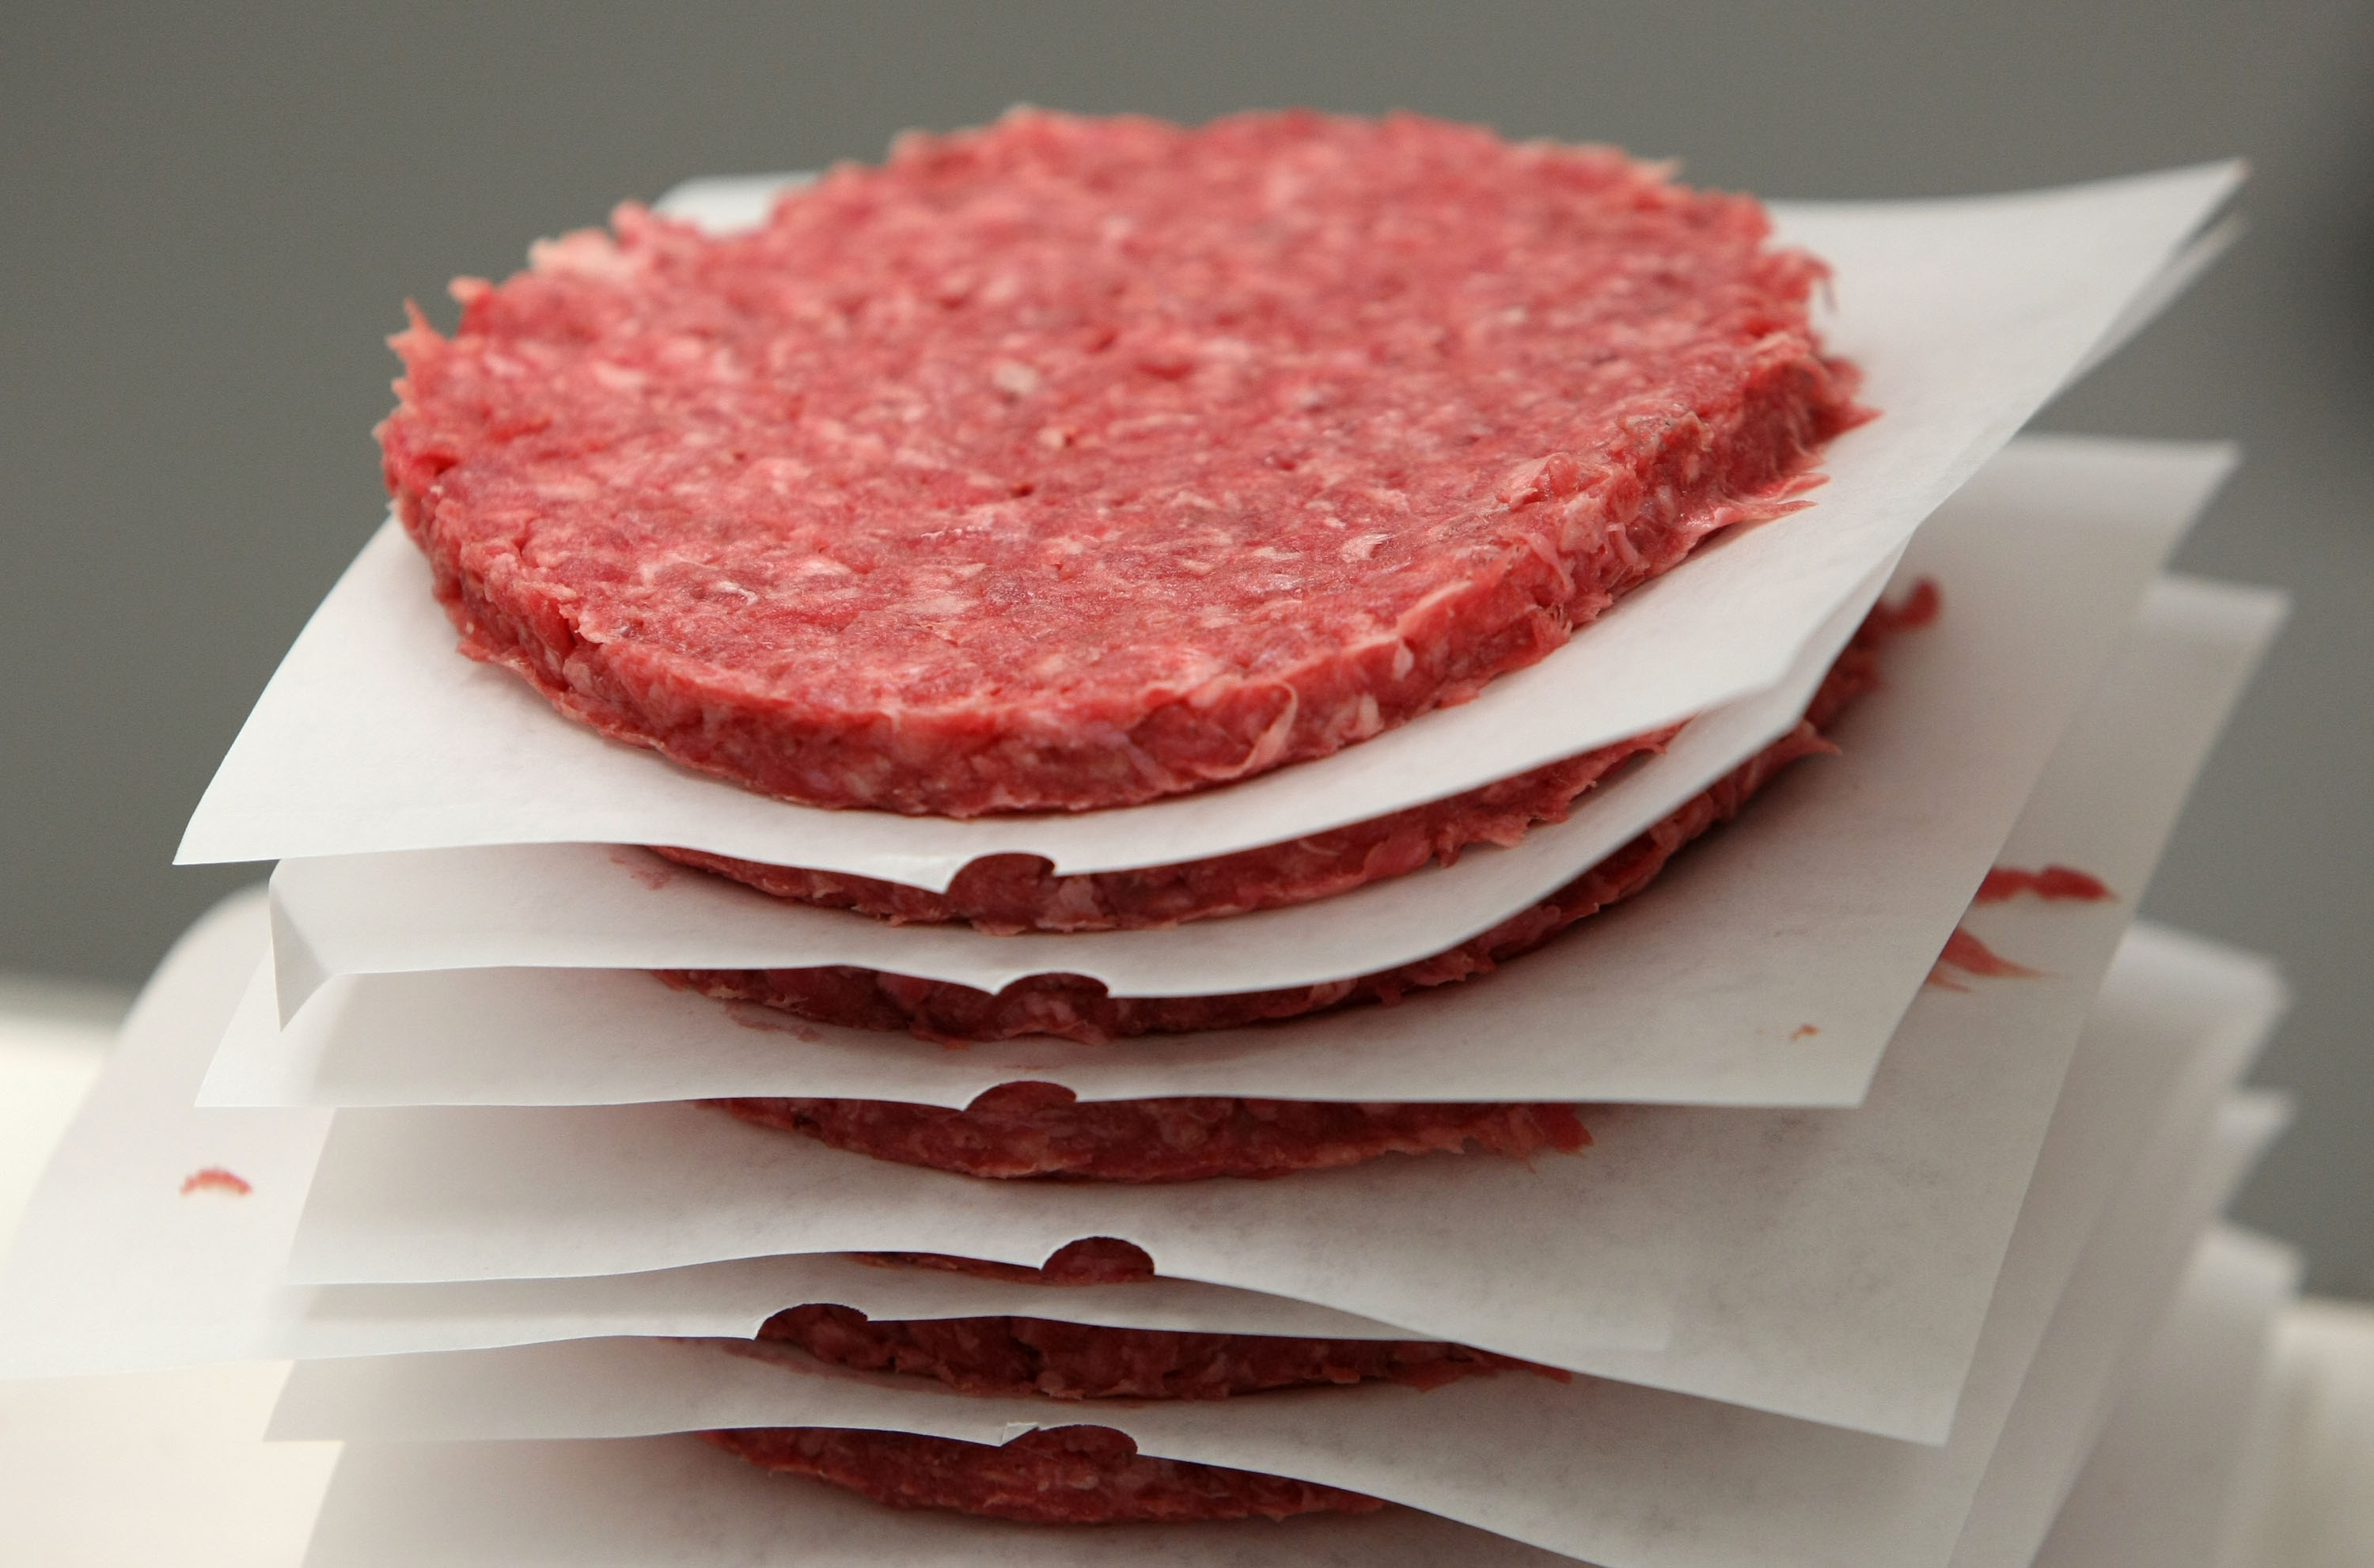 Cannibal Sandwiches Filled With Raw Beef Sicken Wisconsin Locals Cbs News